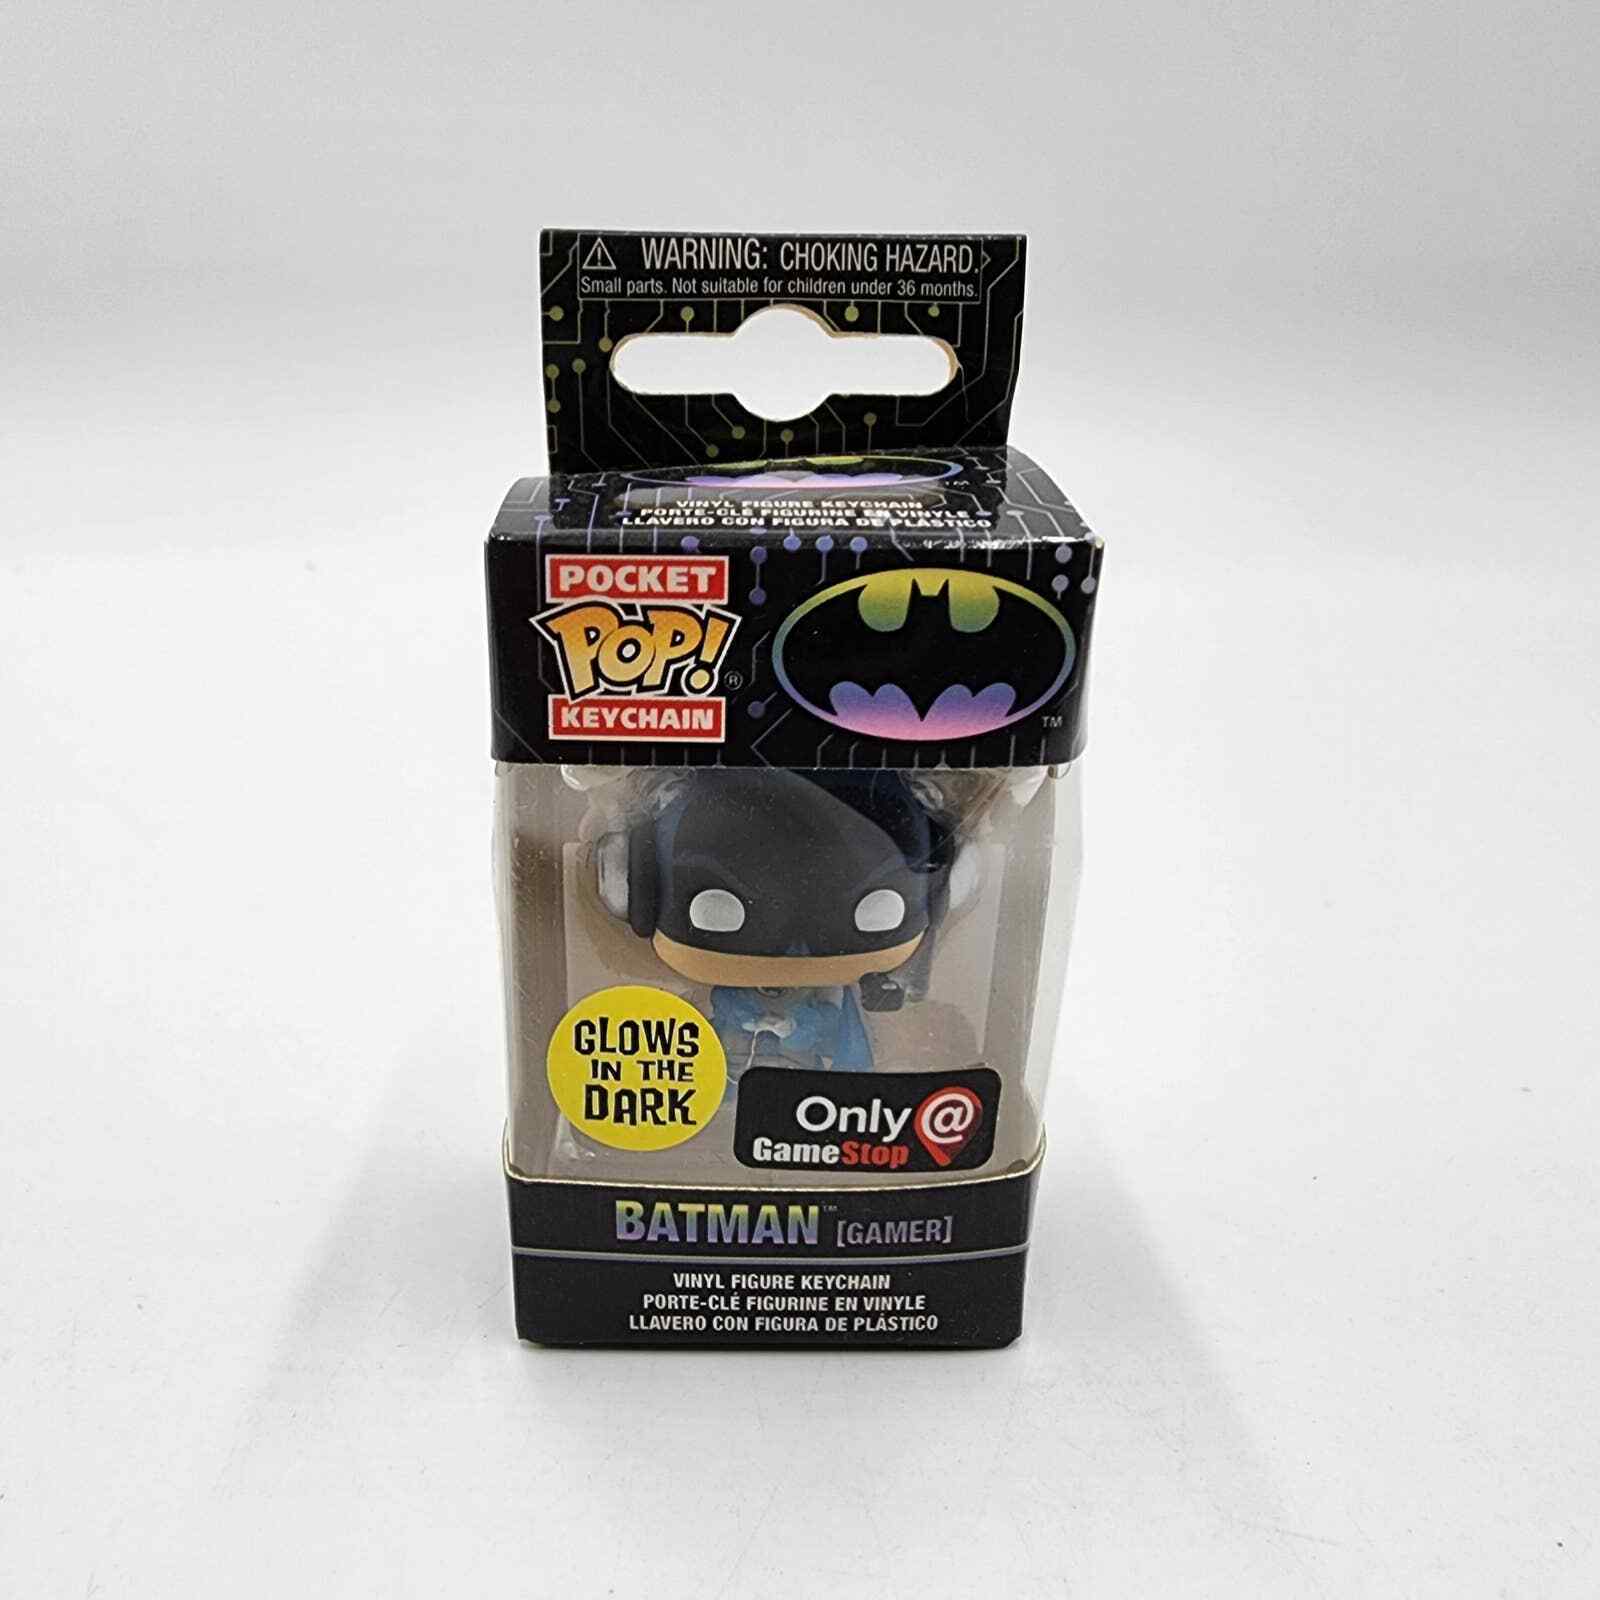 Funko Pocket Pop Batman Gamer DC Comics GITD GameStop Exclusive Keychain